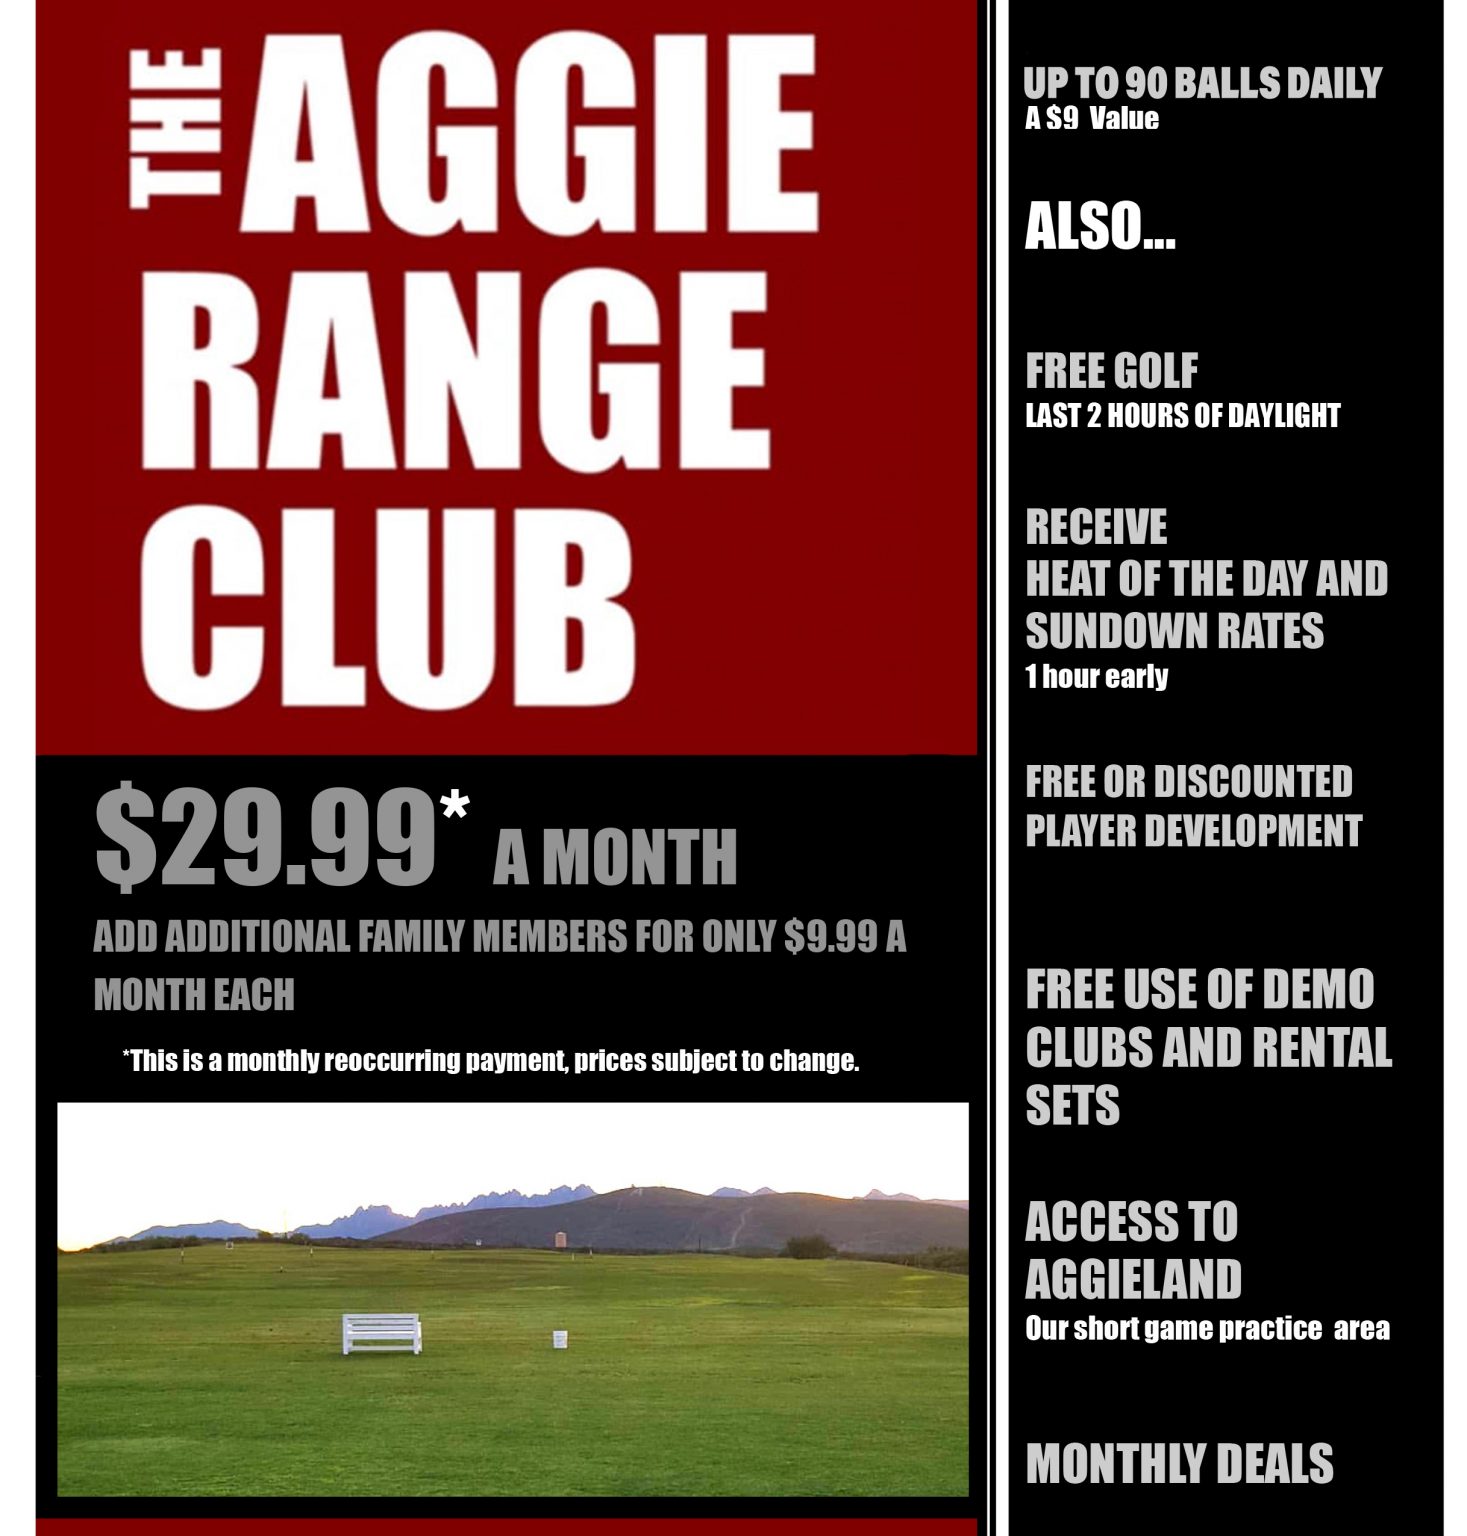 Aggie Range Club